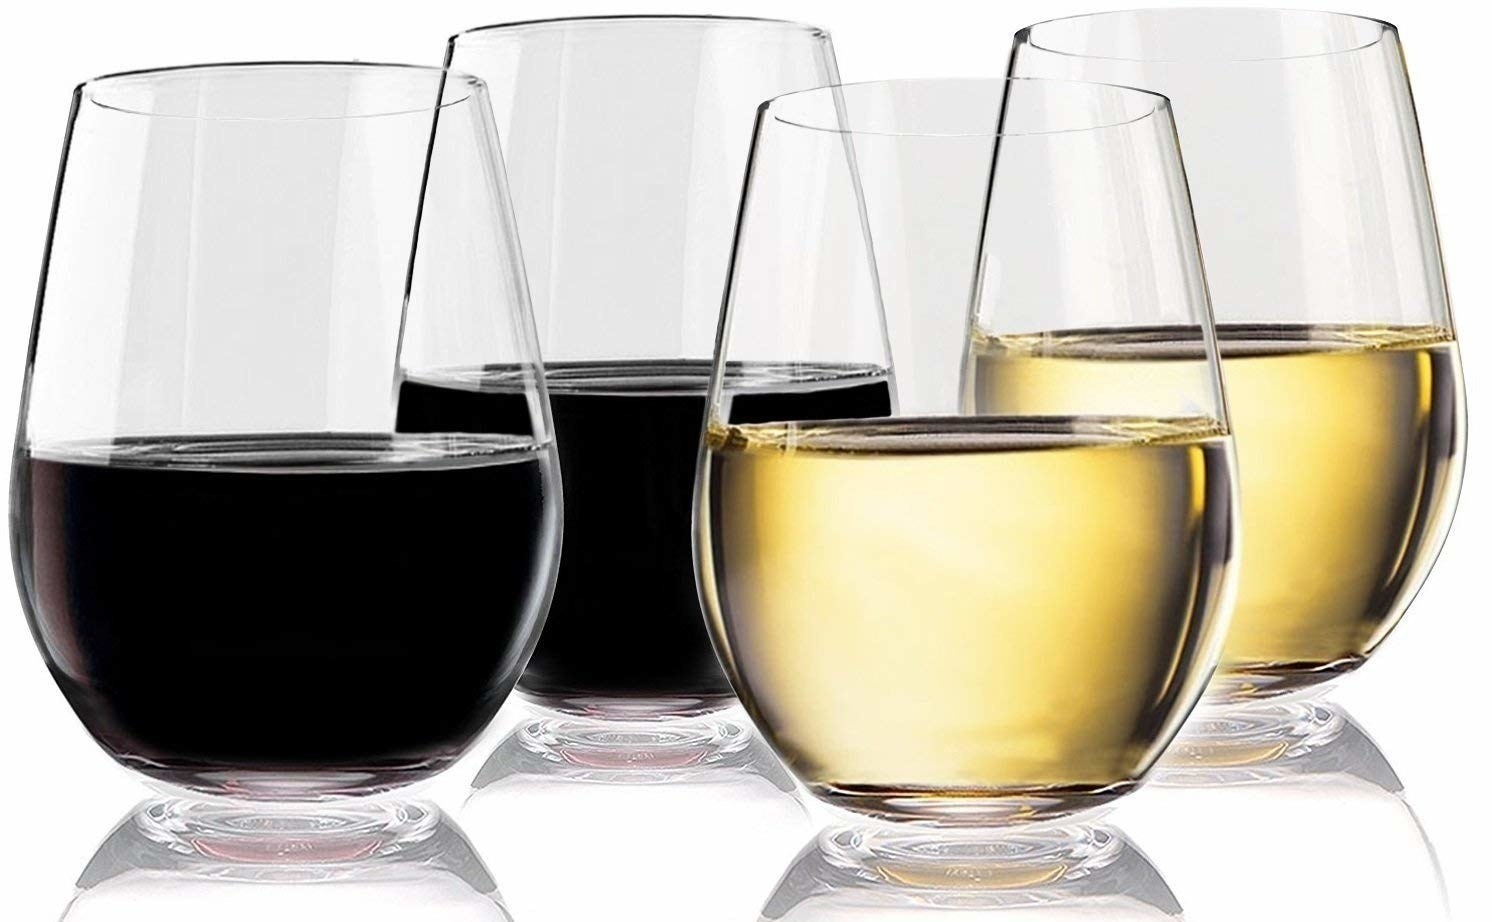 The wine glasses